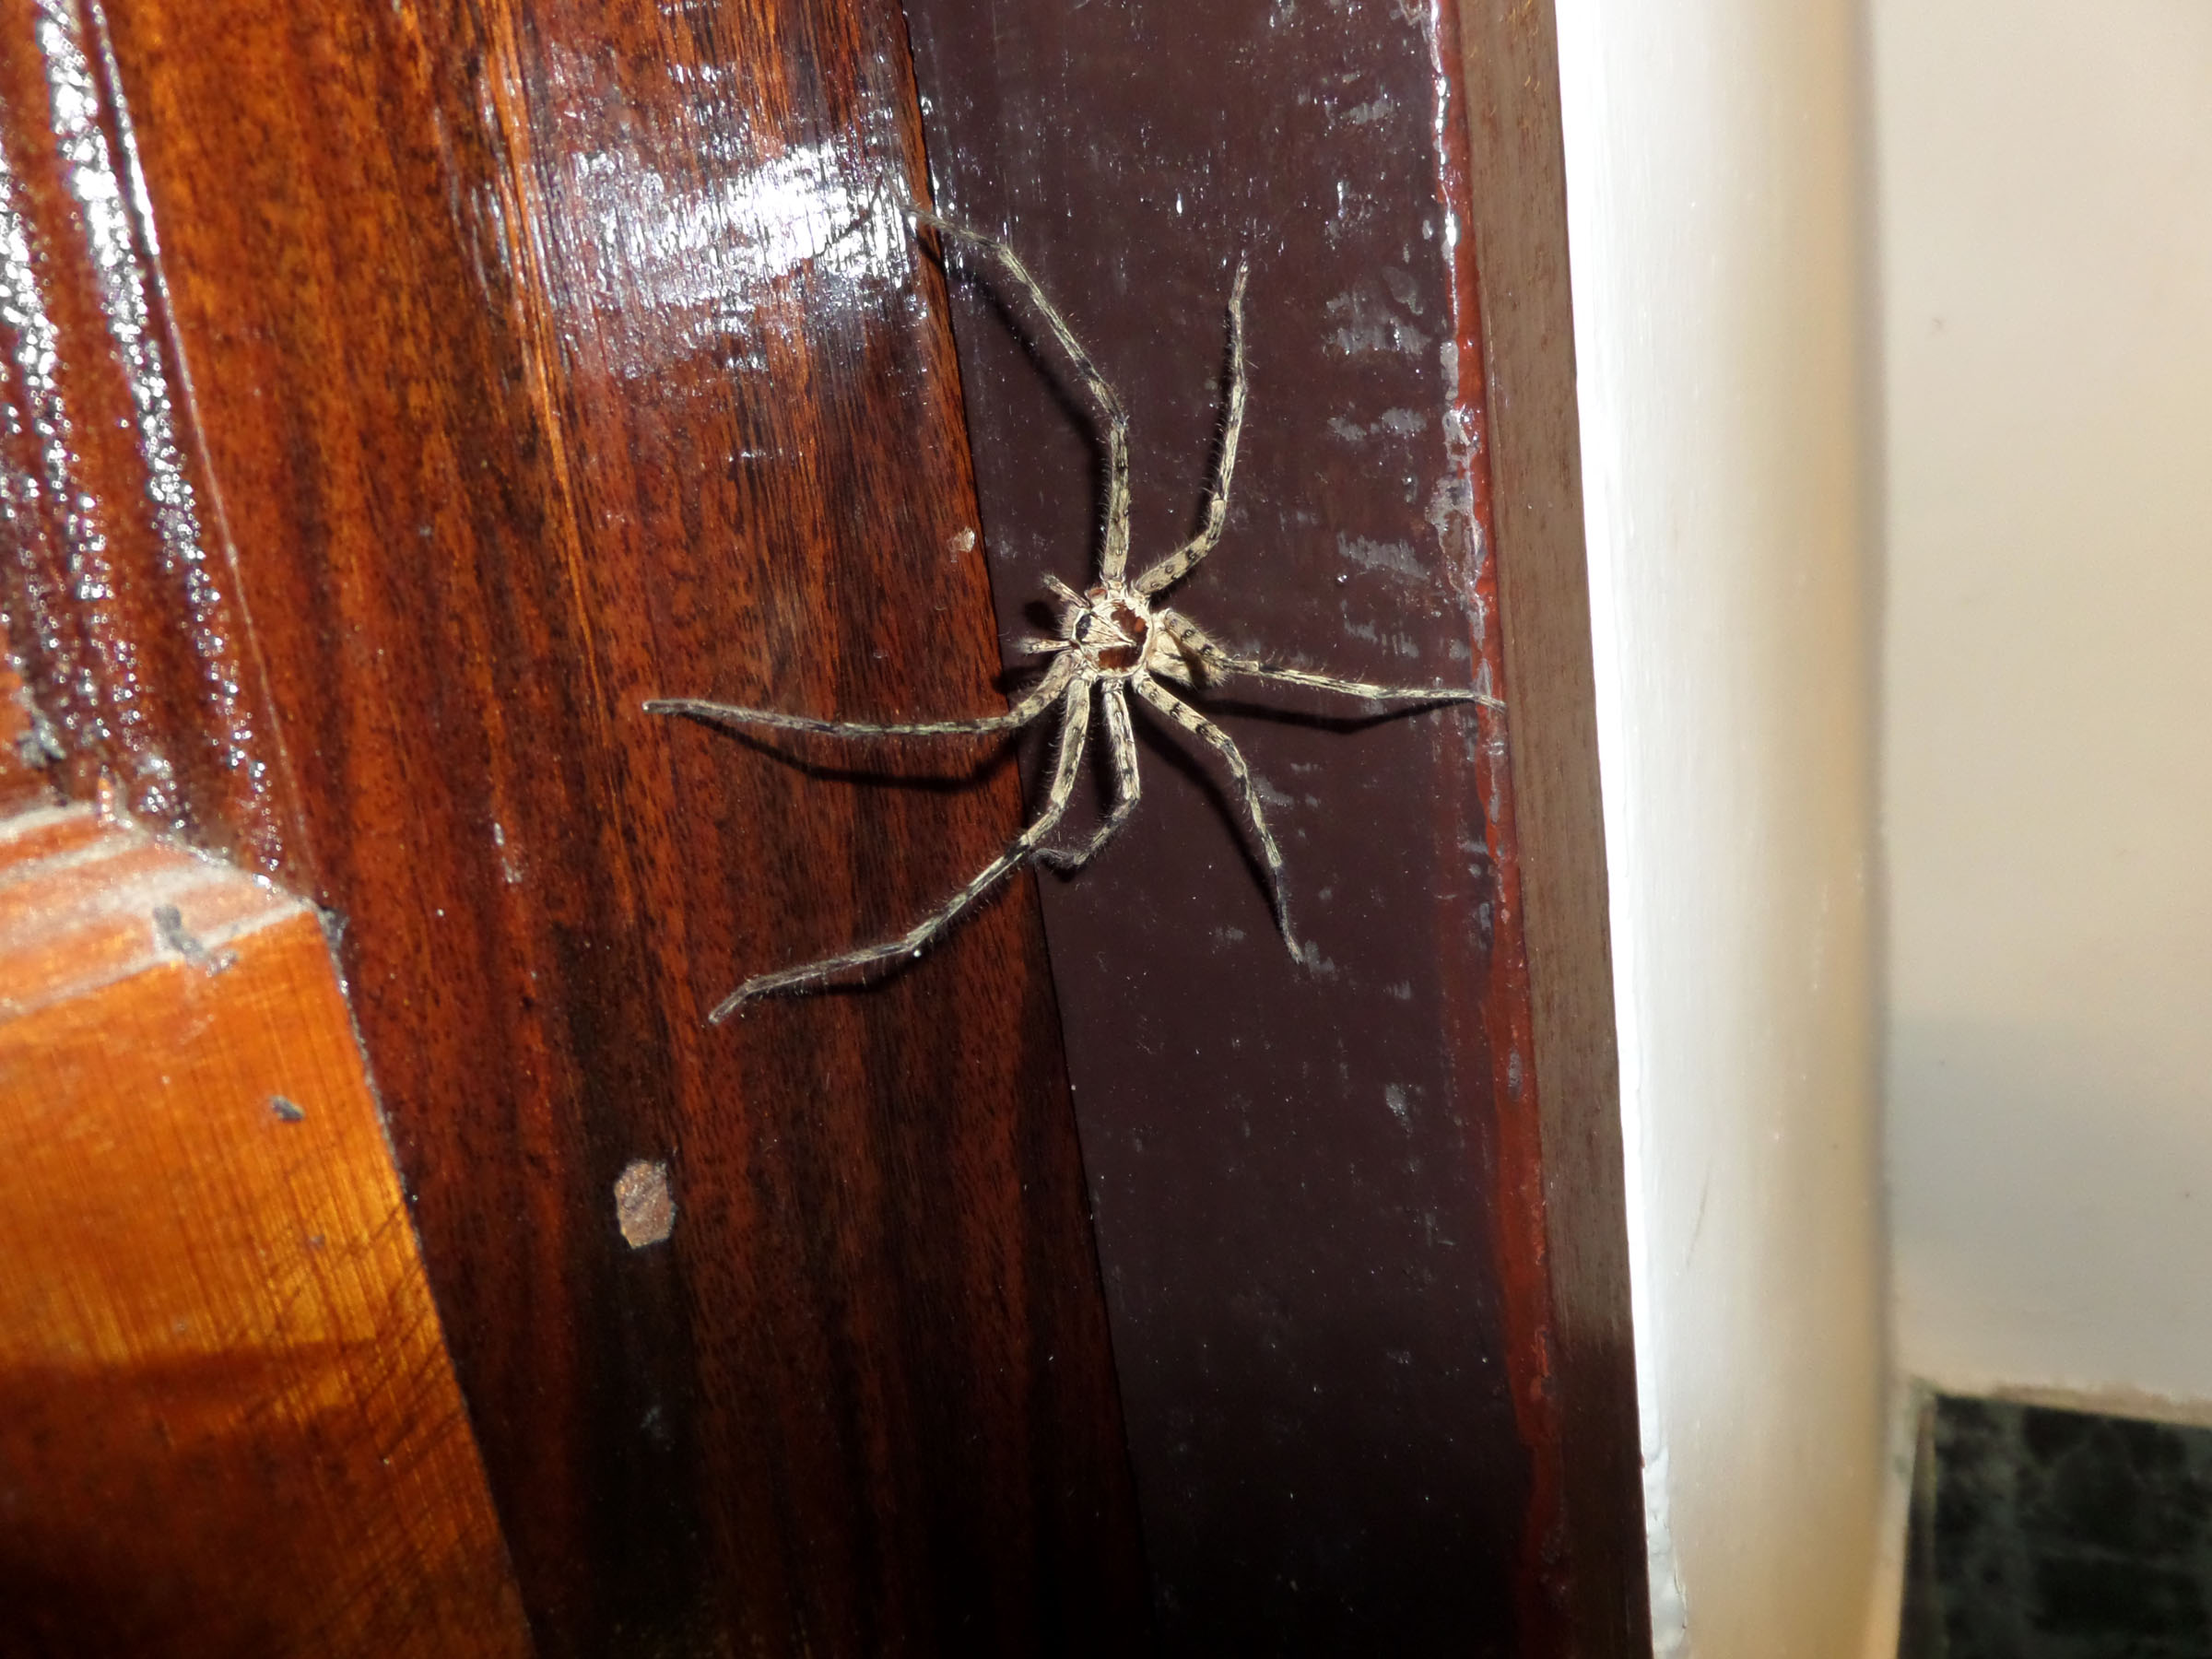 Large Thai spider, Arachnid, Large, Predator, Spider, HQ Photo